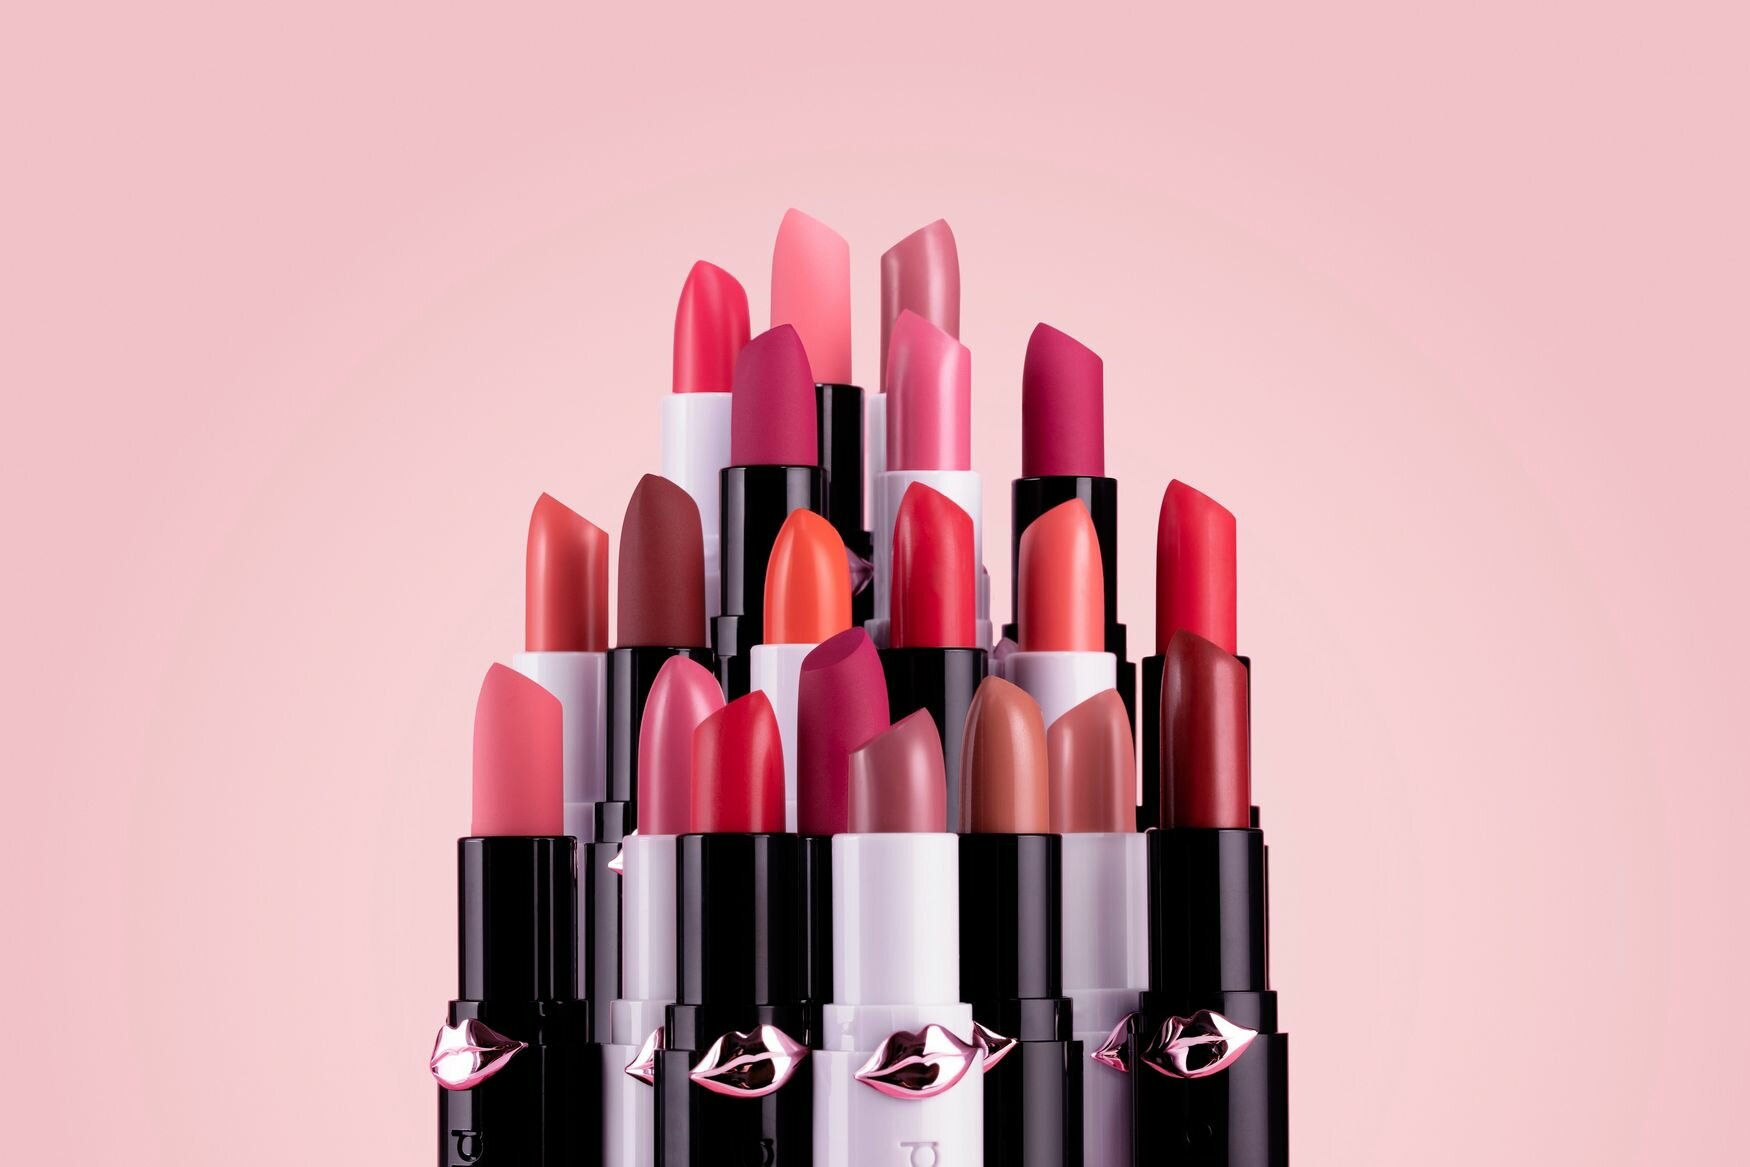 Wet n Wild Помада Для Губ MegaLast Lipstick Товар 1422e mochalicious Markwins Beauty Products CN - фото №8